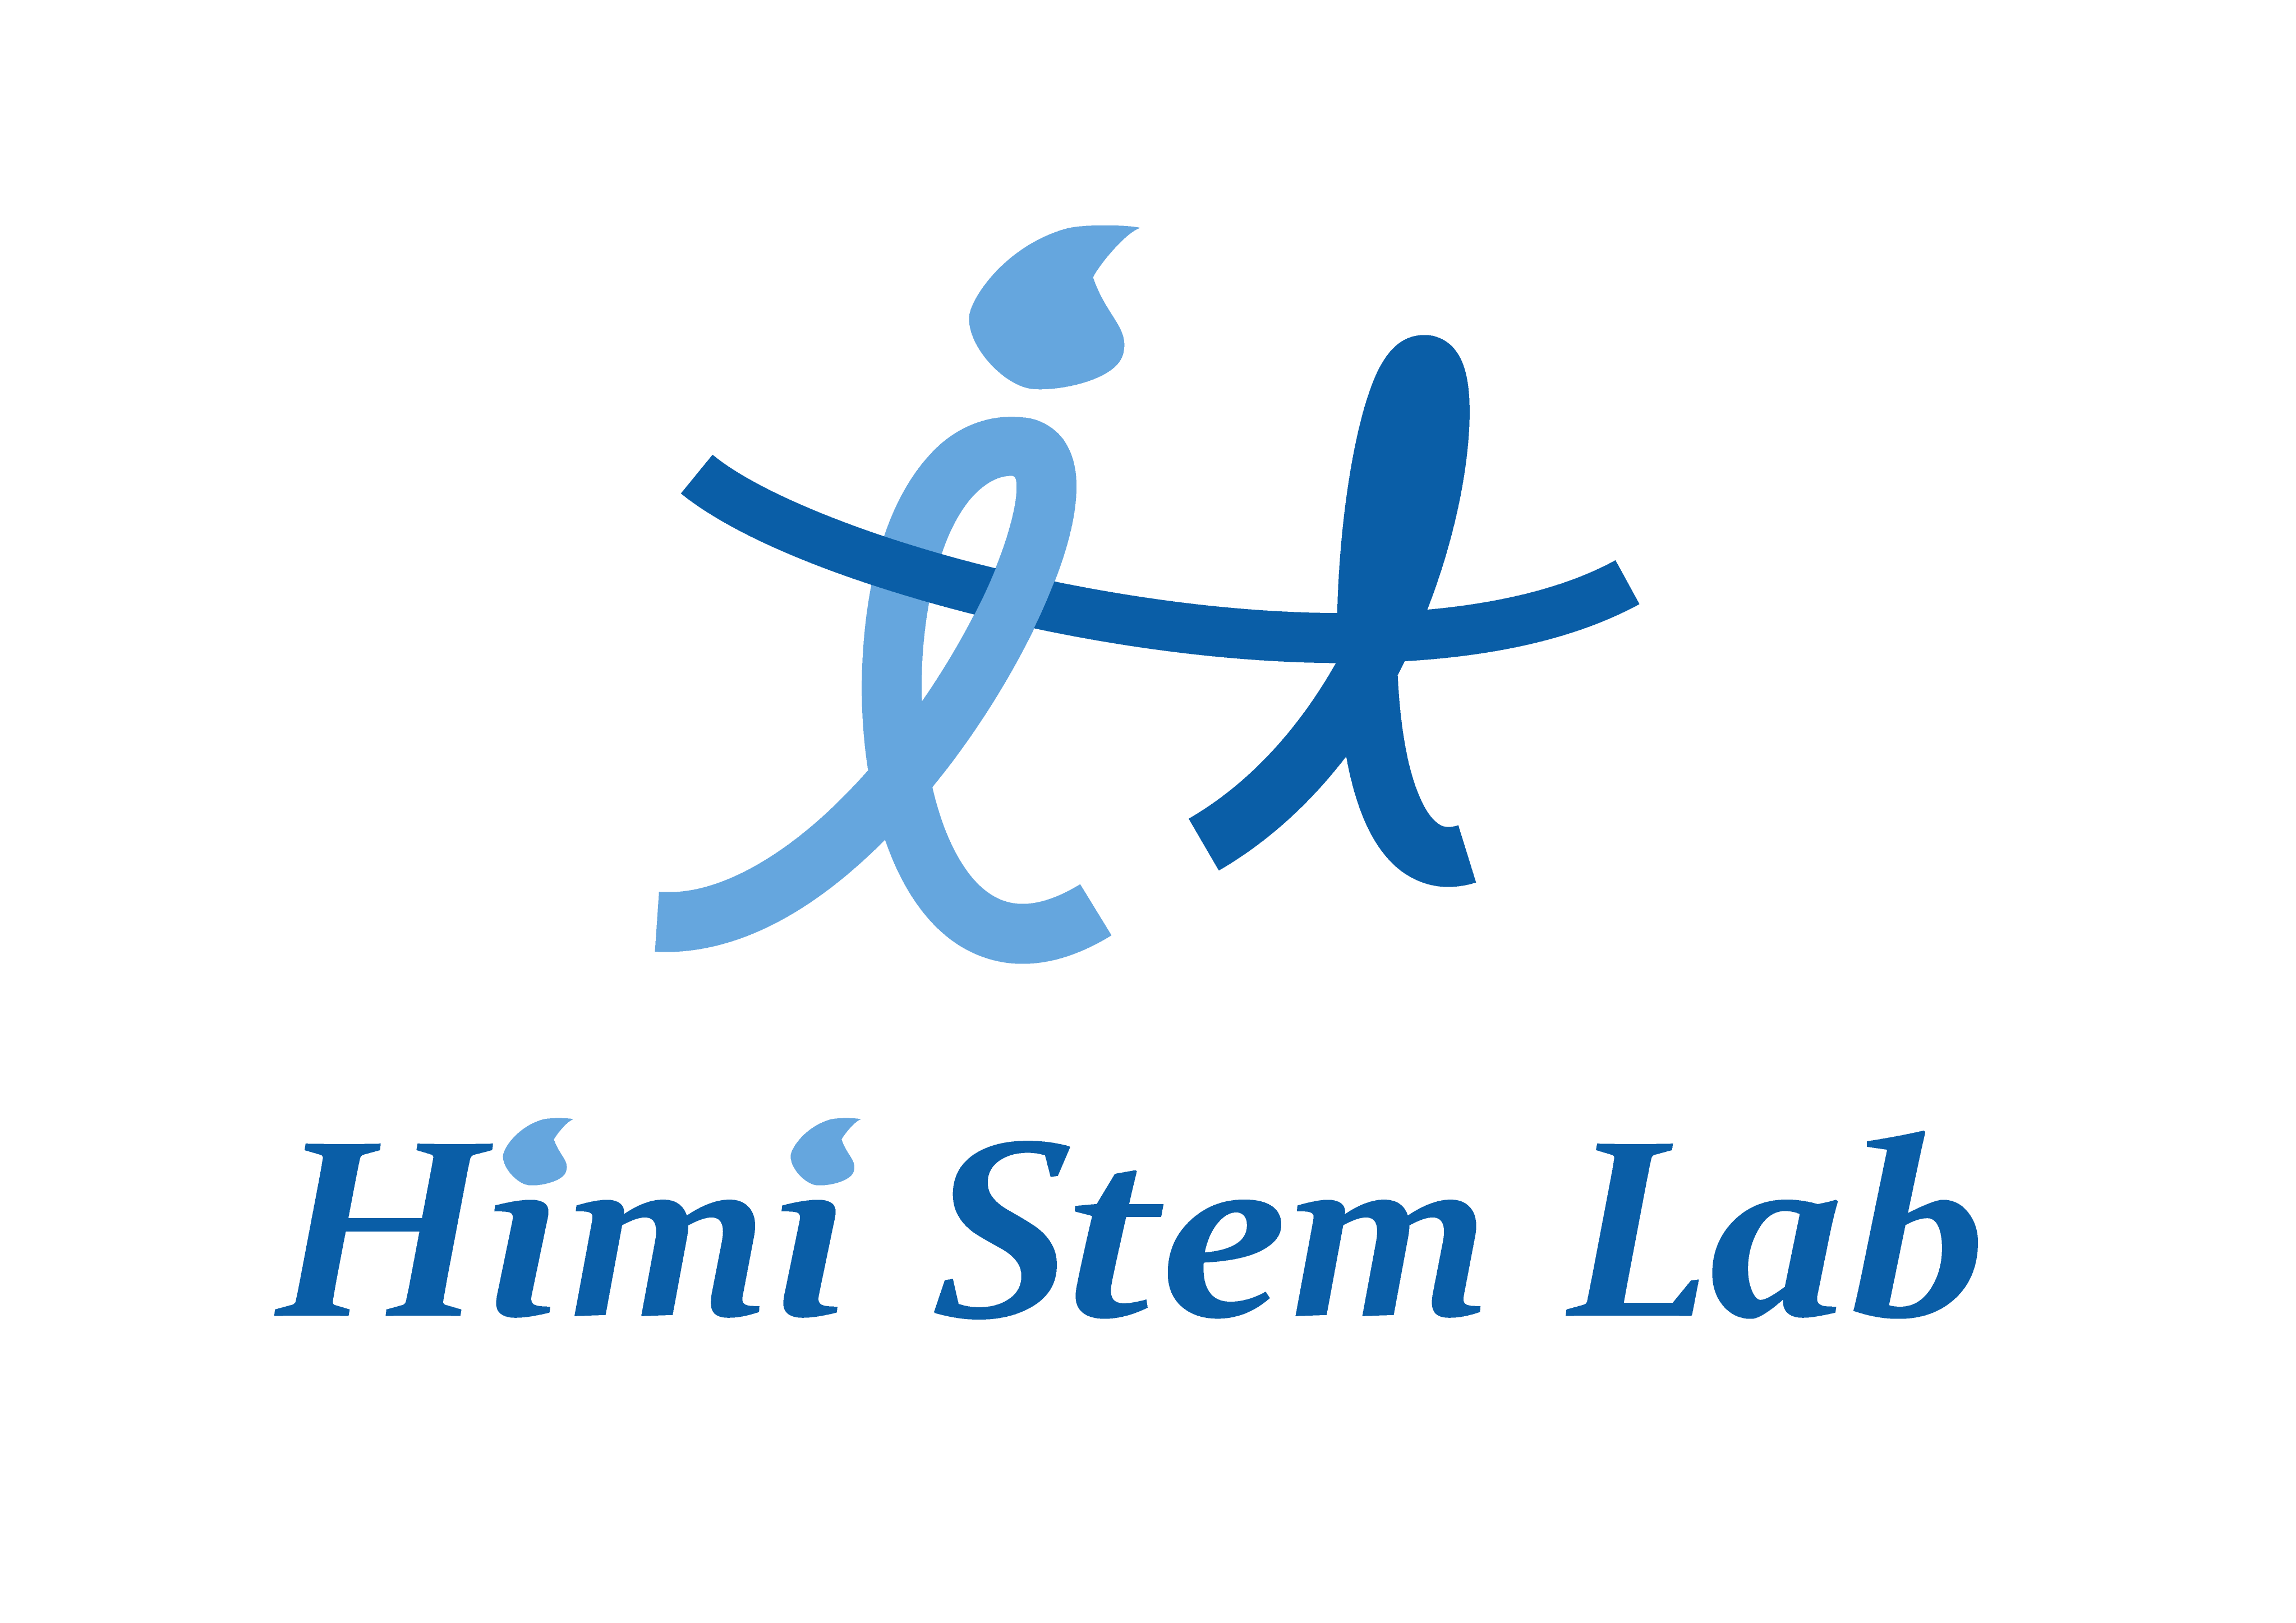 himi_stem_lab